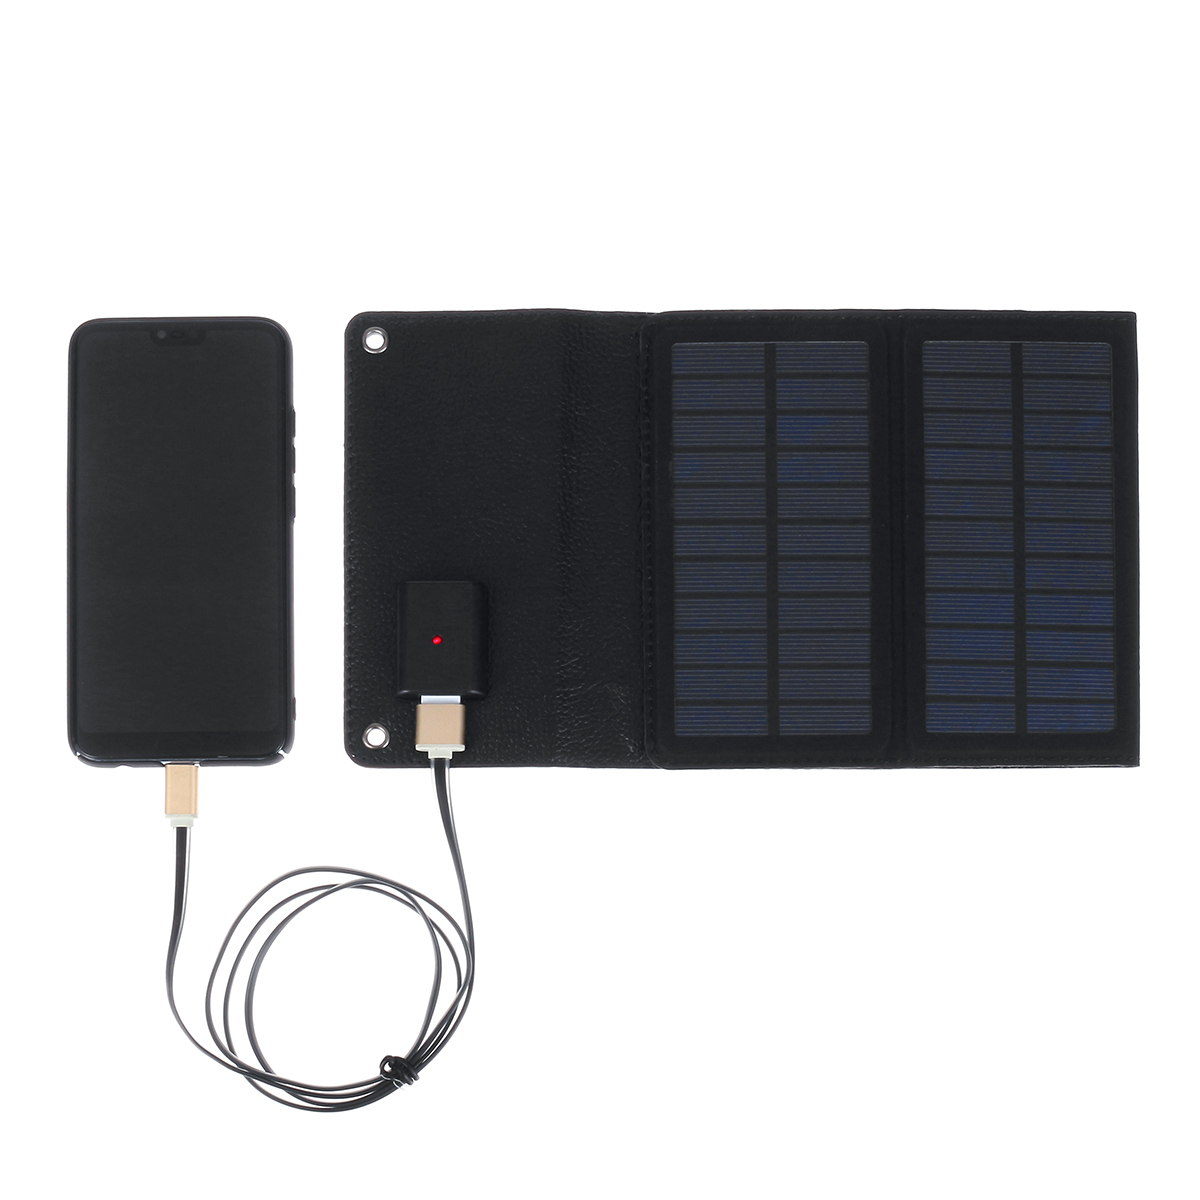 7W 5V Waterproof Foldable Mono-crystalline Silicon Solar Panel With LED Charging indicator & USB Interface 16